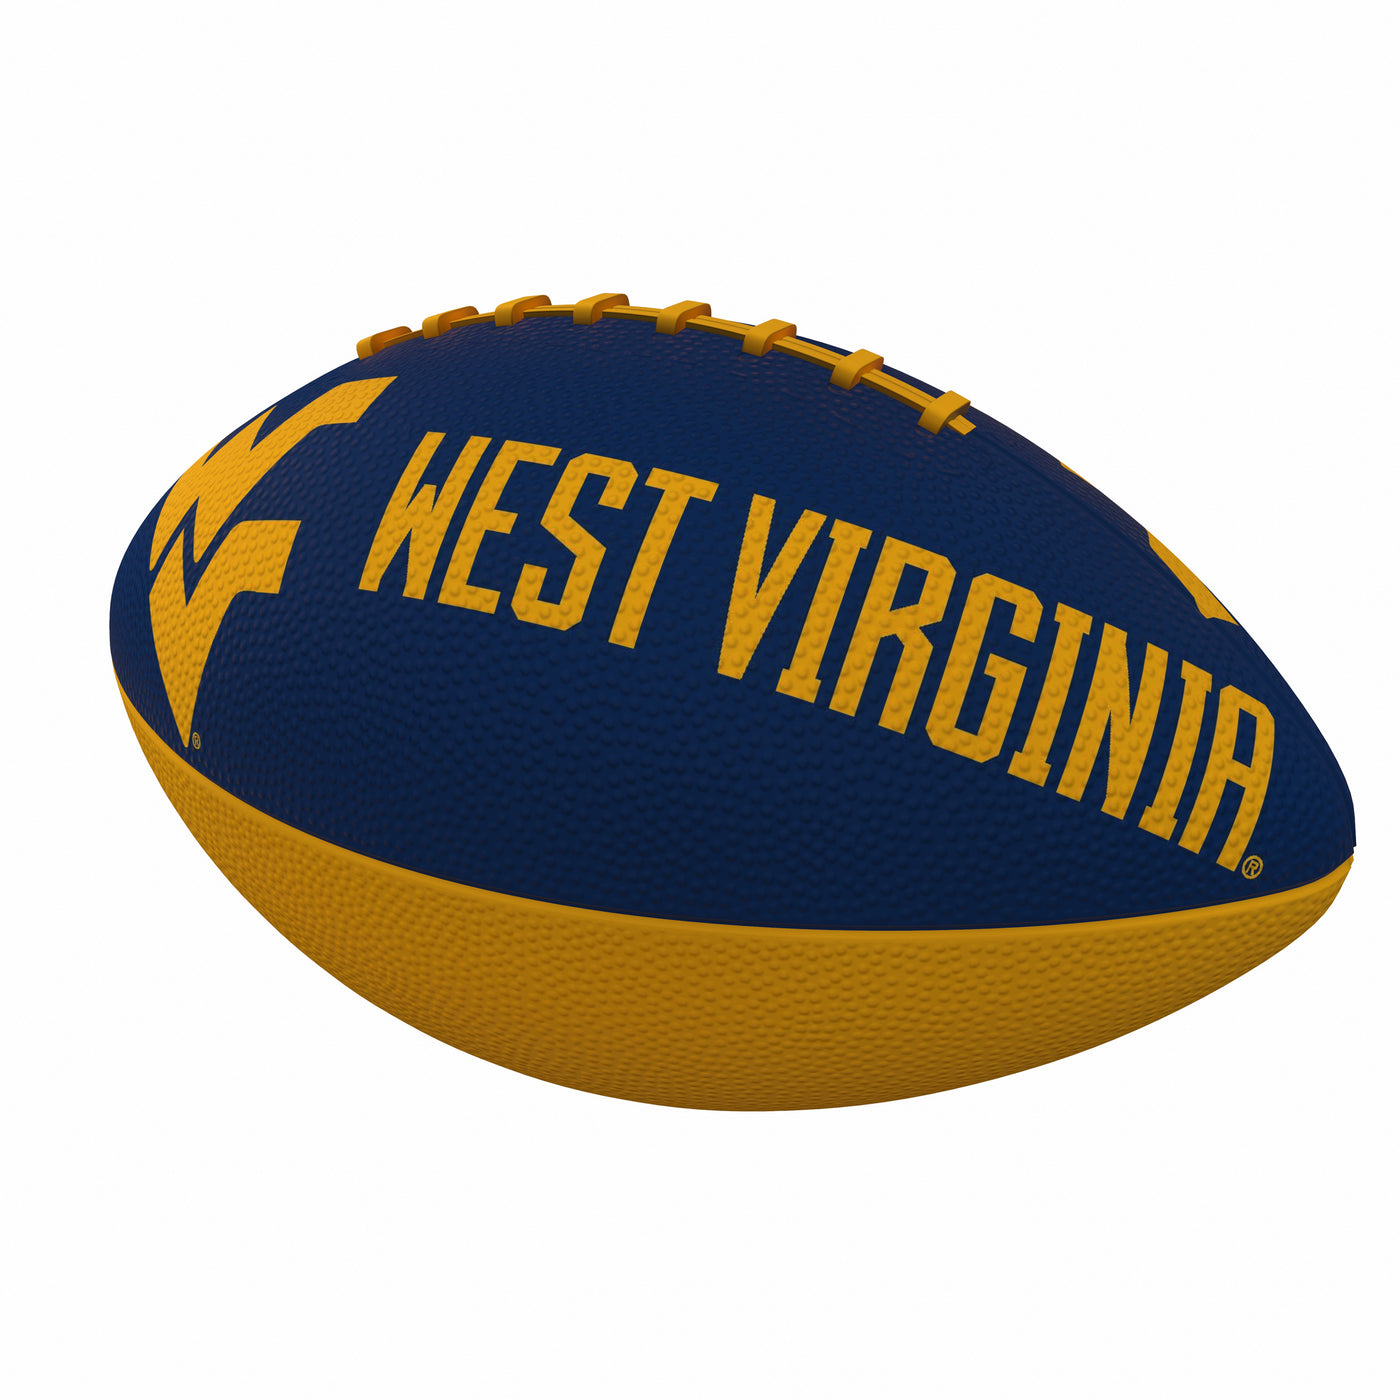 West Virginia Combo Logo Junior-Size Rubber Football